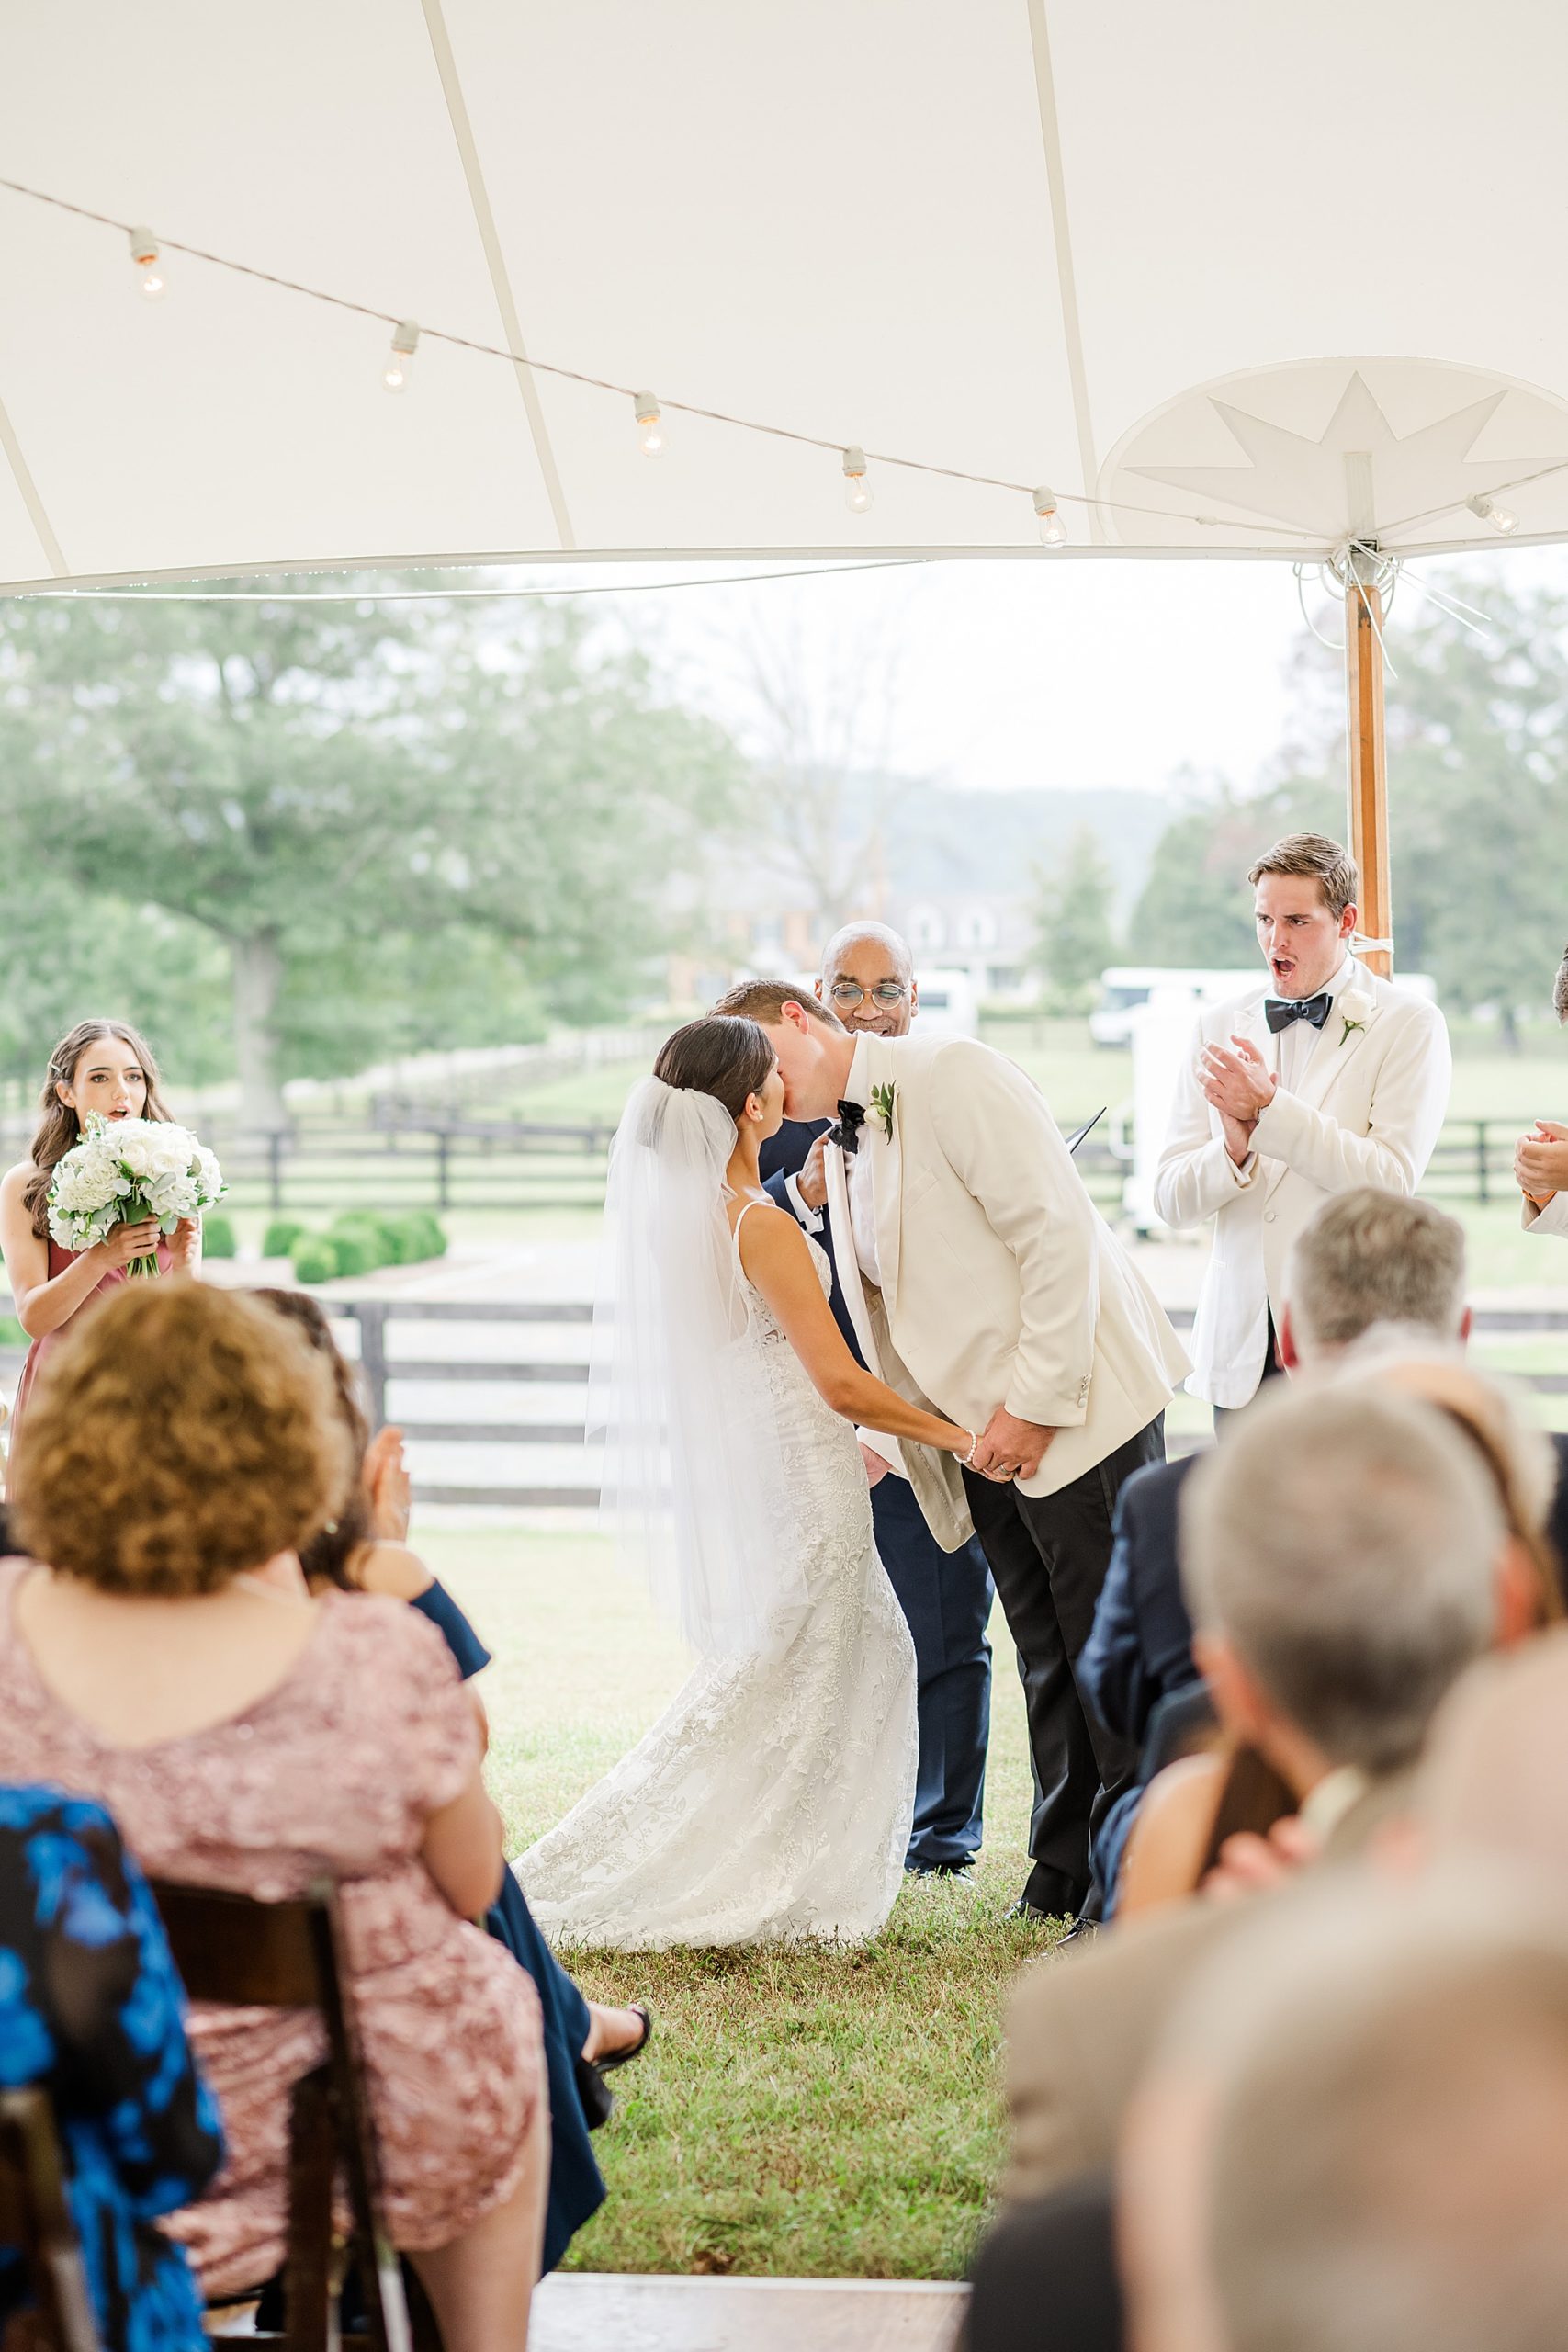 Outdoor Ceremony at Mount Fair Farm Wedding Photographed by Virginia Wedding Photographer Kailey Brianna Photographer